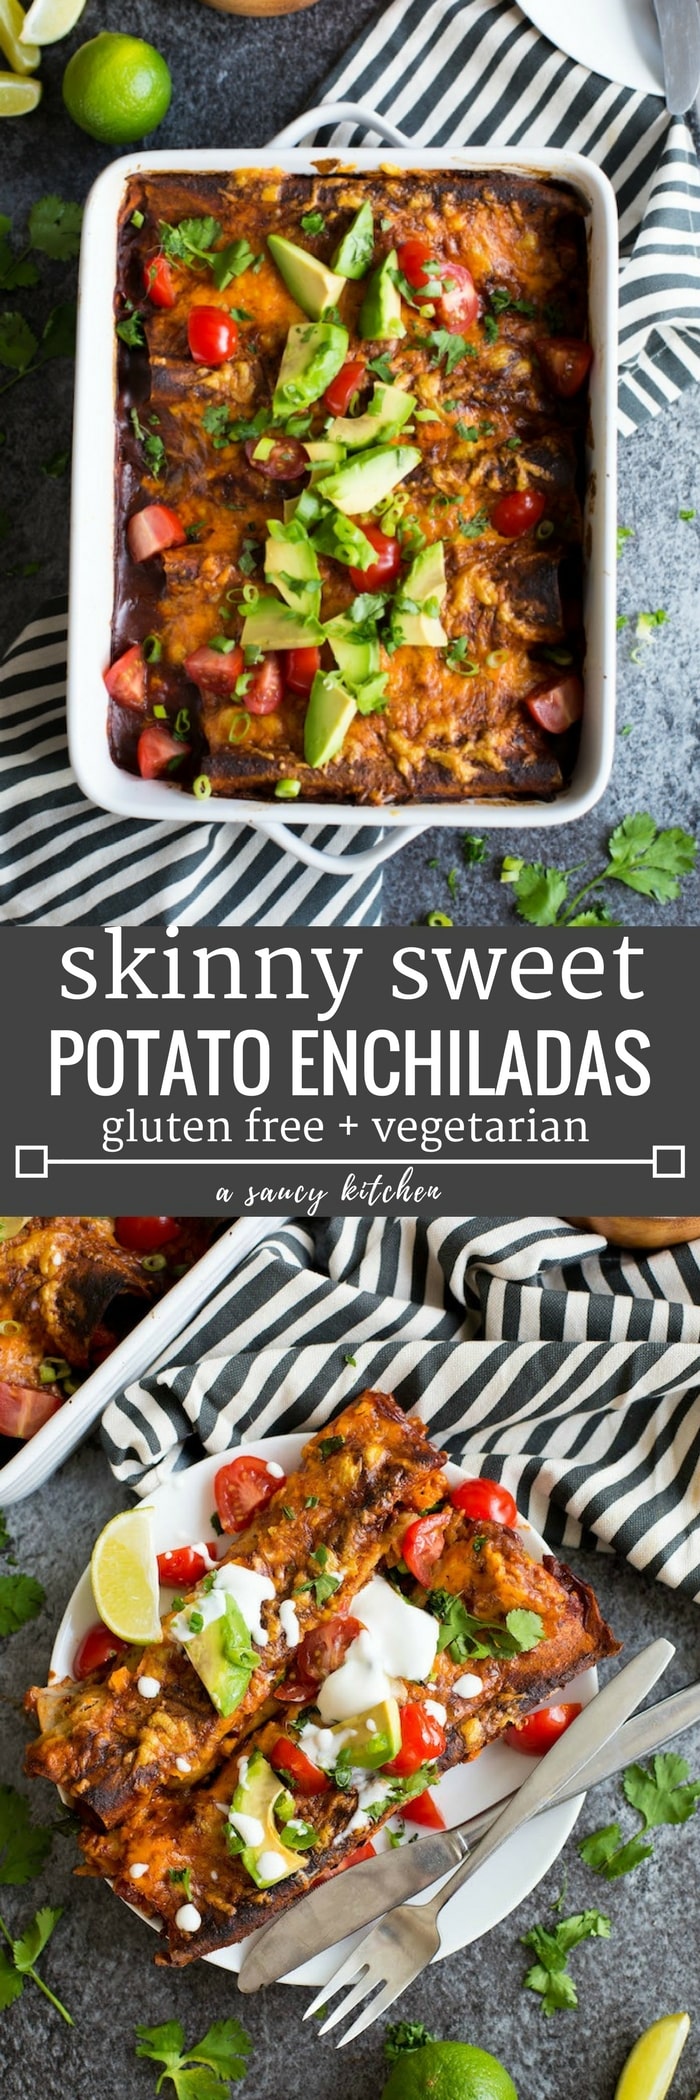 skinny sweet potato enchiladas (vegetarian + bean free)